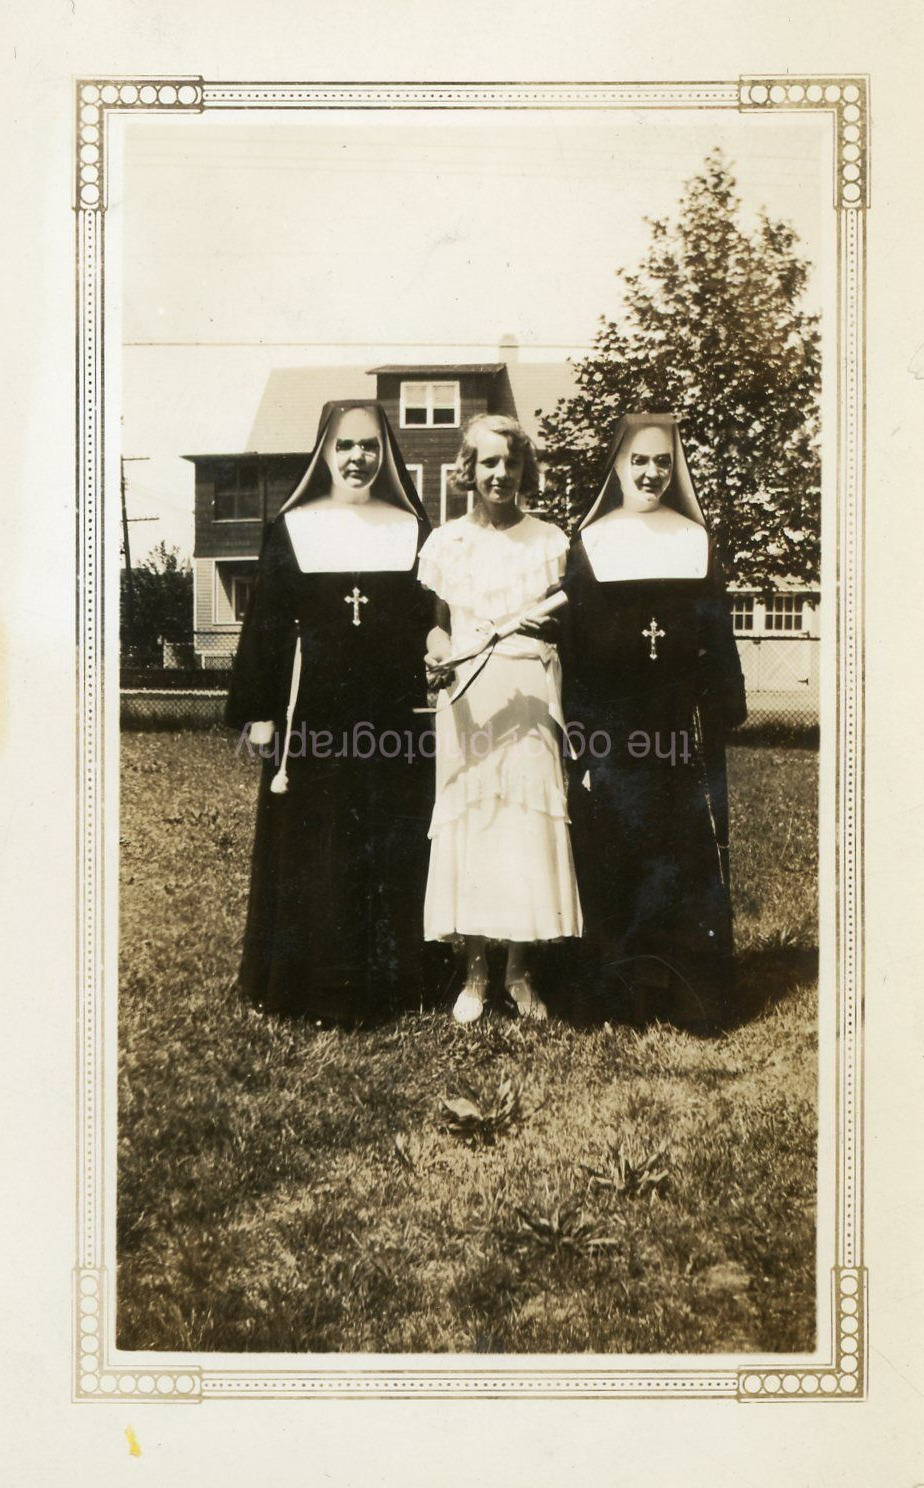 PORTRAIT WITH NUNS Vintage FOUND PHOTO Black And White WOMEN 45 LA 80 J